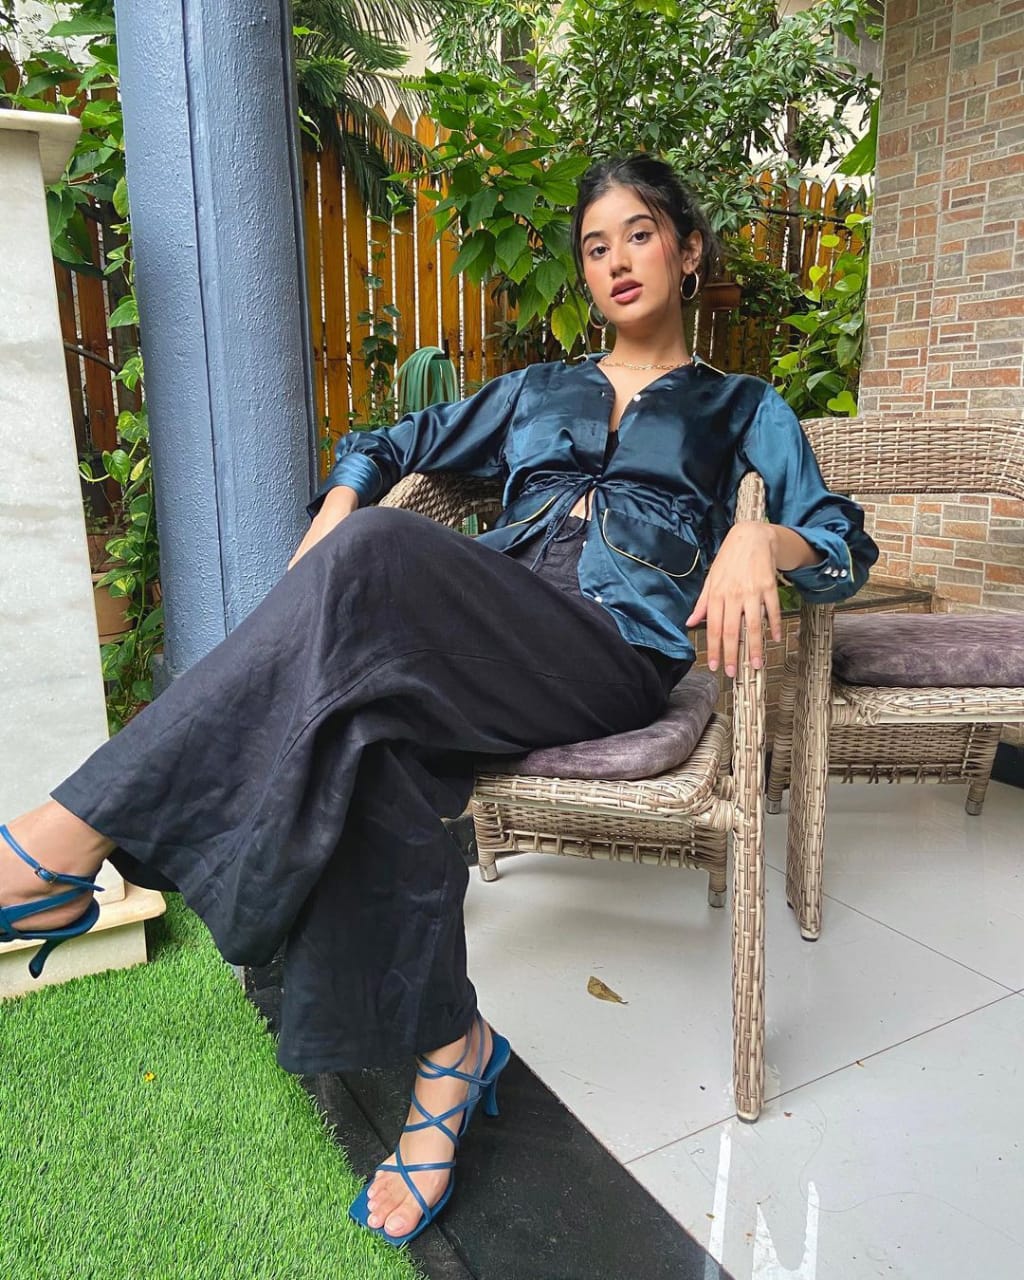 Shweta Bhintade (Instagram Star) Age, Boyfriend, Career, Bio